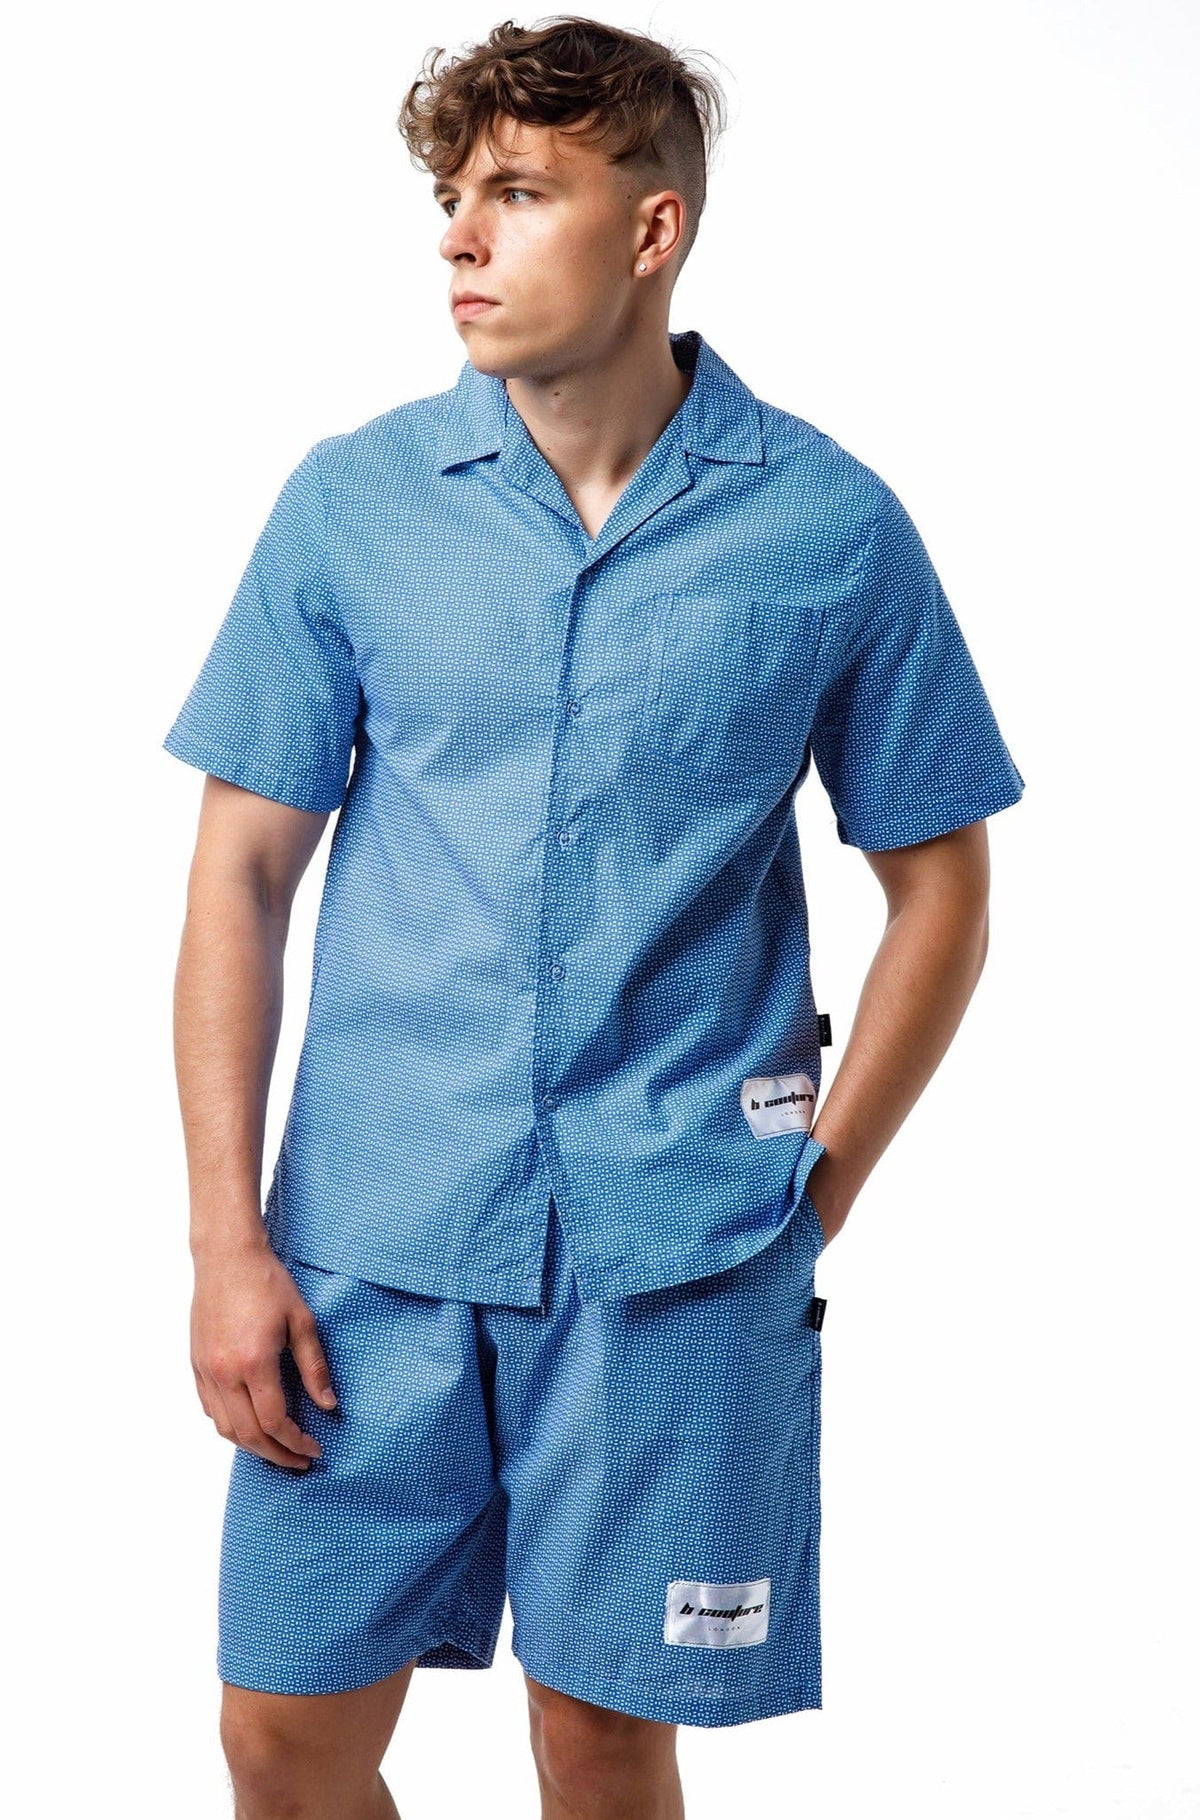 OSTERLAY - Printed Shirt & Short Set - Blue/White